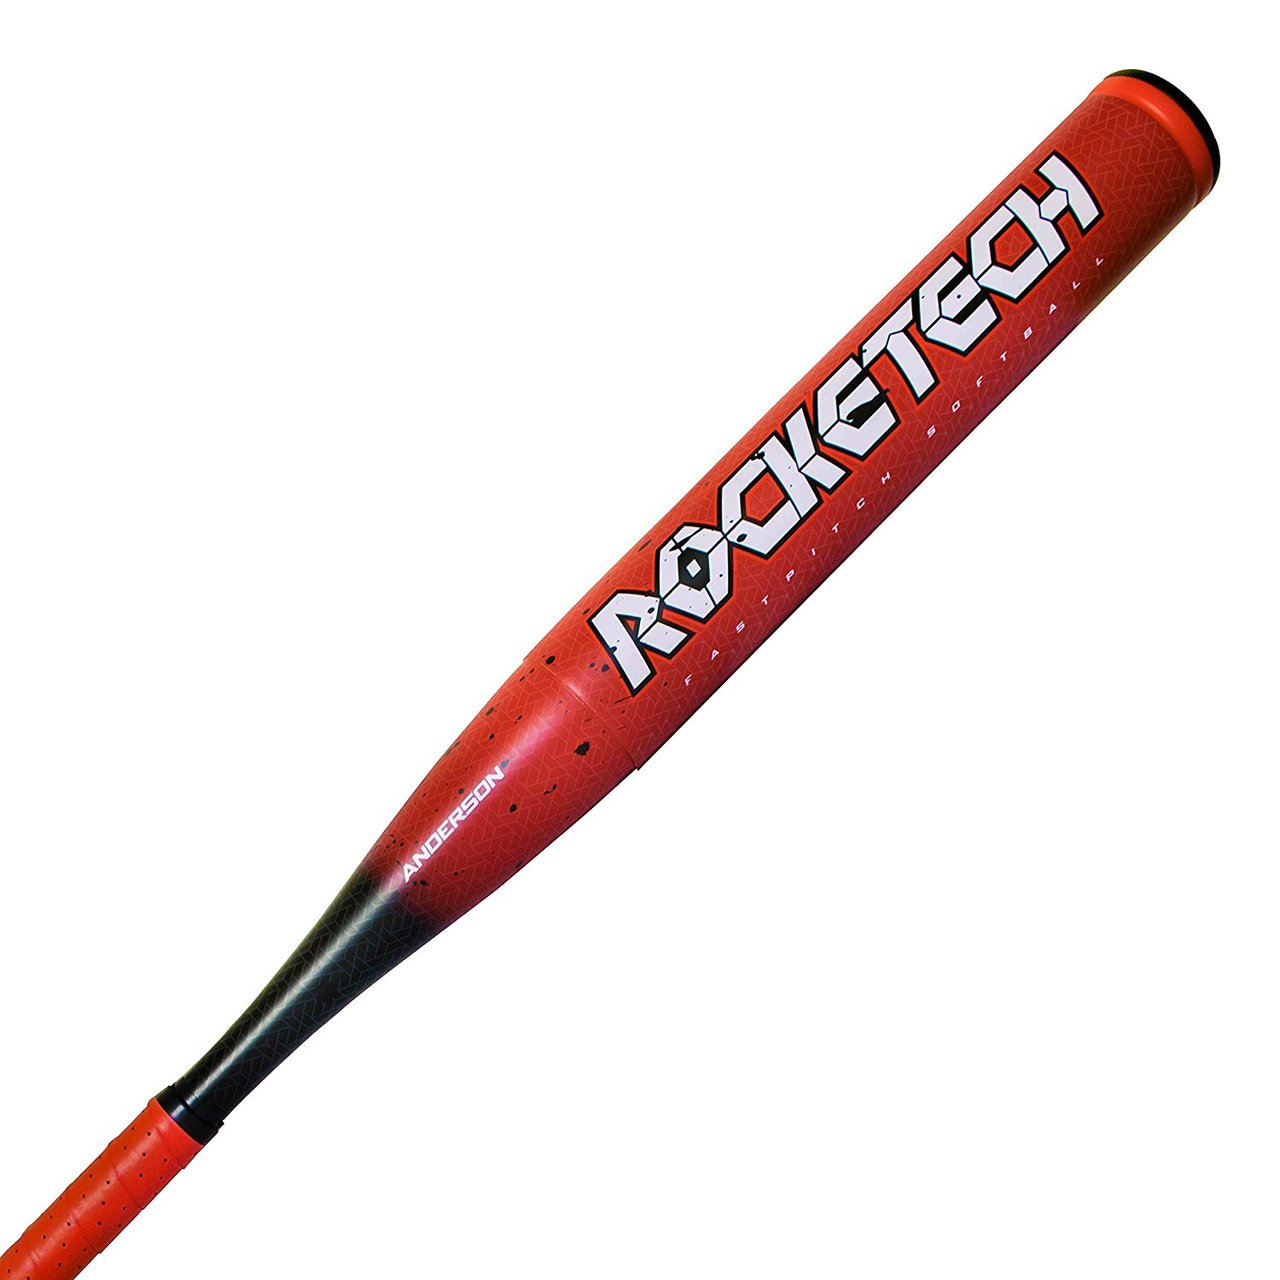 anderson-rocketech-2018-9-fastpitch-softball-bat-31-inch-22-oz 0170343122 Anderson 874147008393 <span>The <strong>2018 Rocketech -9 </strong>Fast Pitch Softball Bat is Virtually Bulletproof!